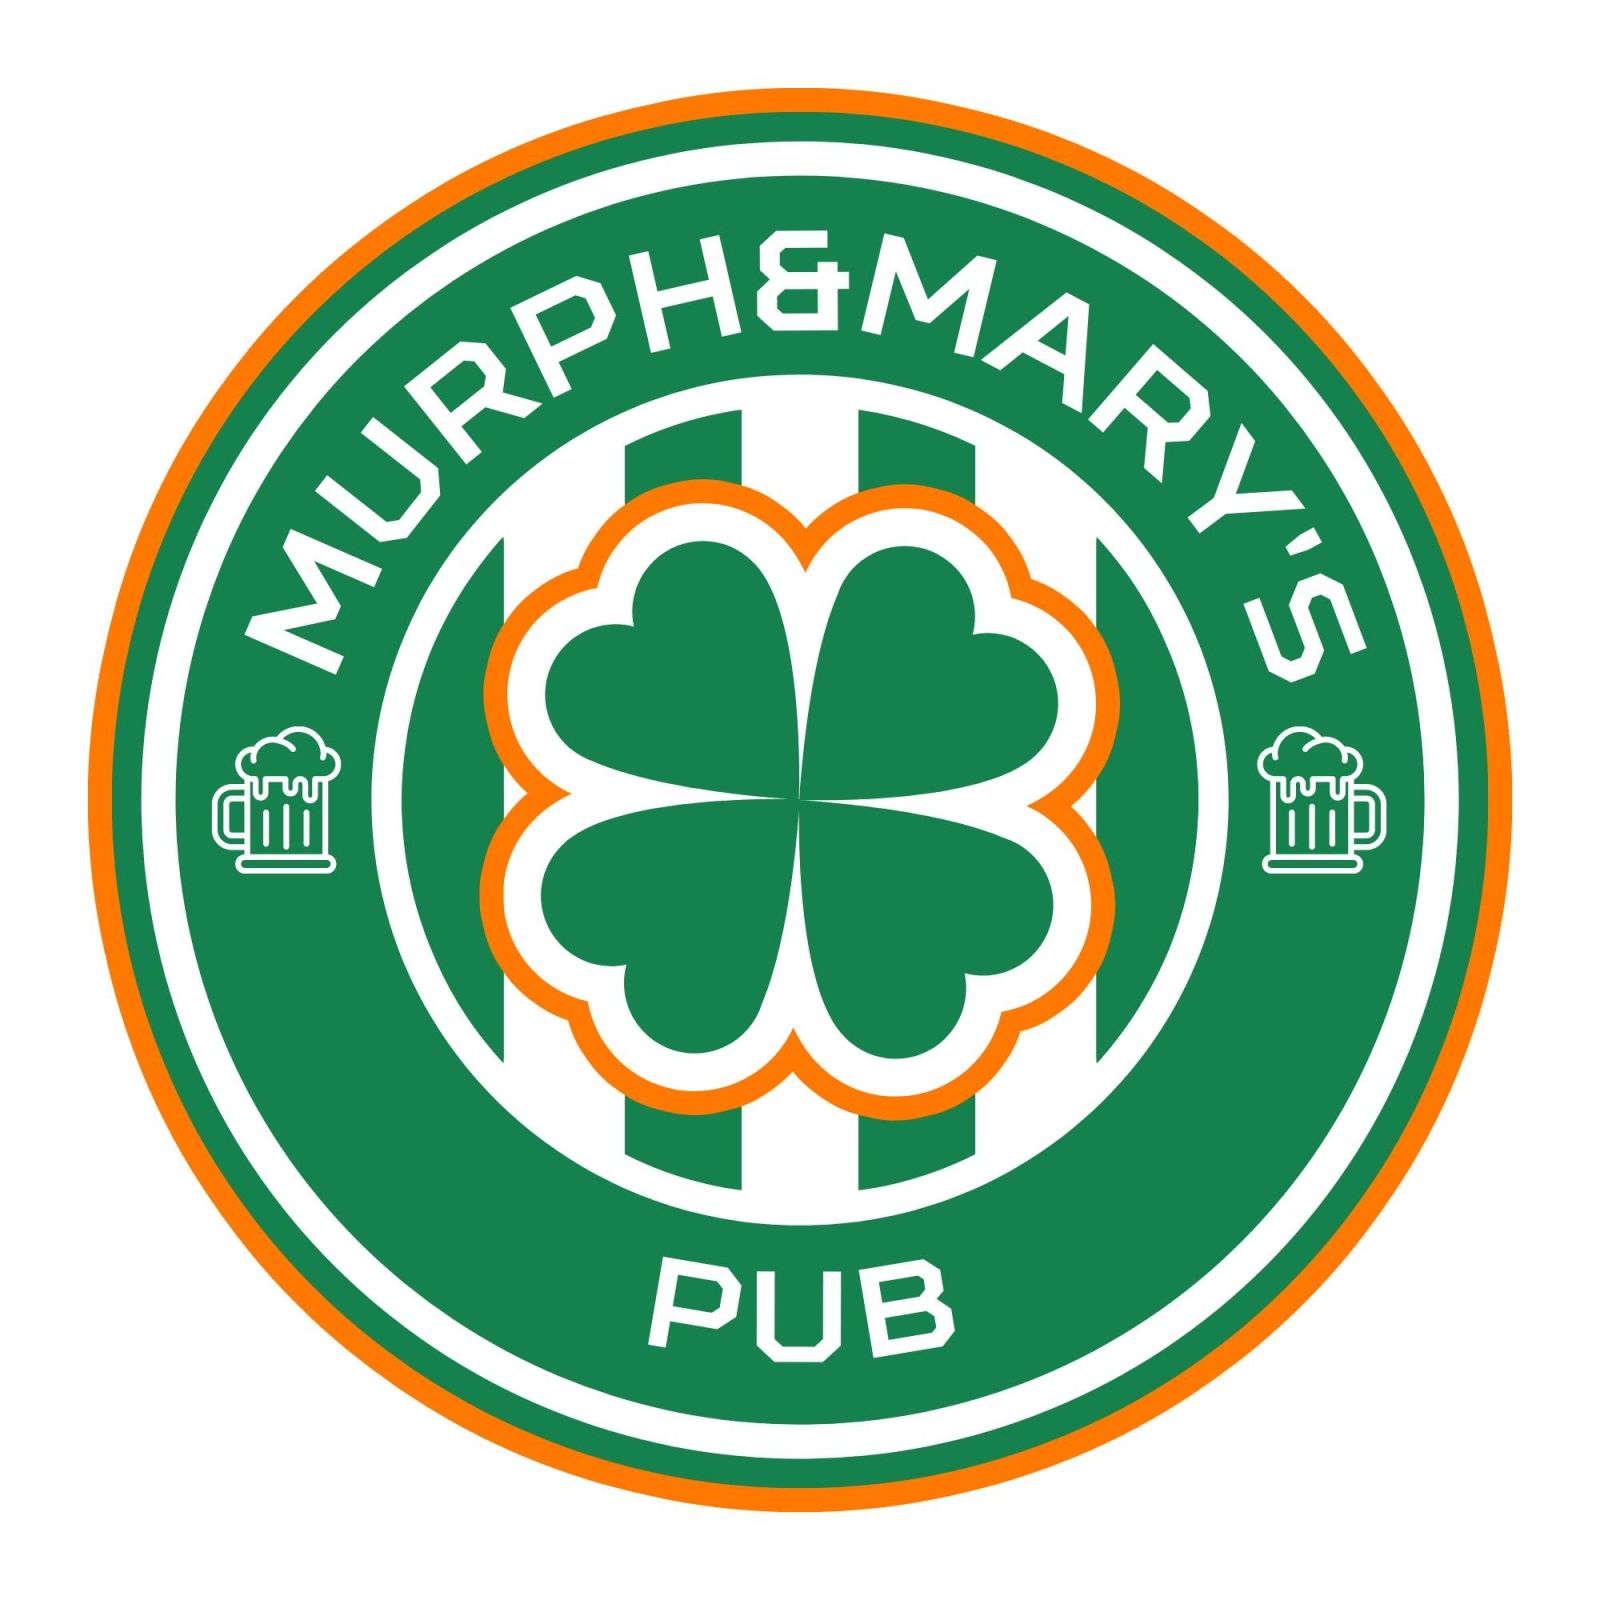 Murph & Mary's Pub's Image